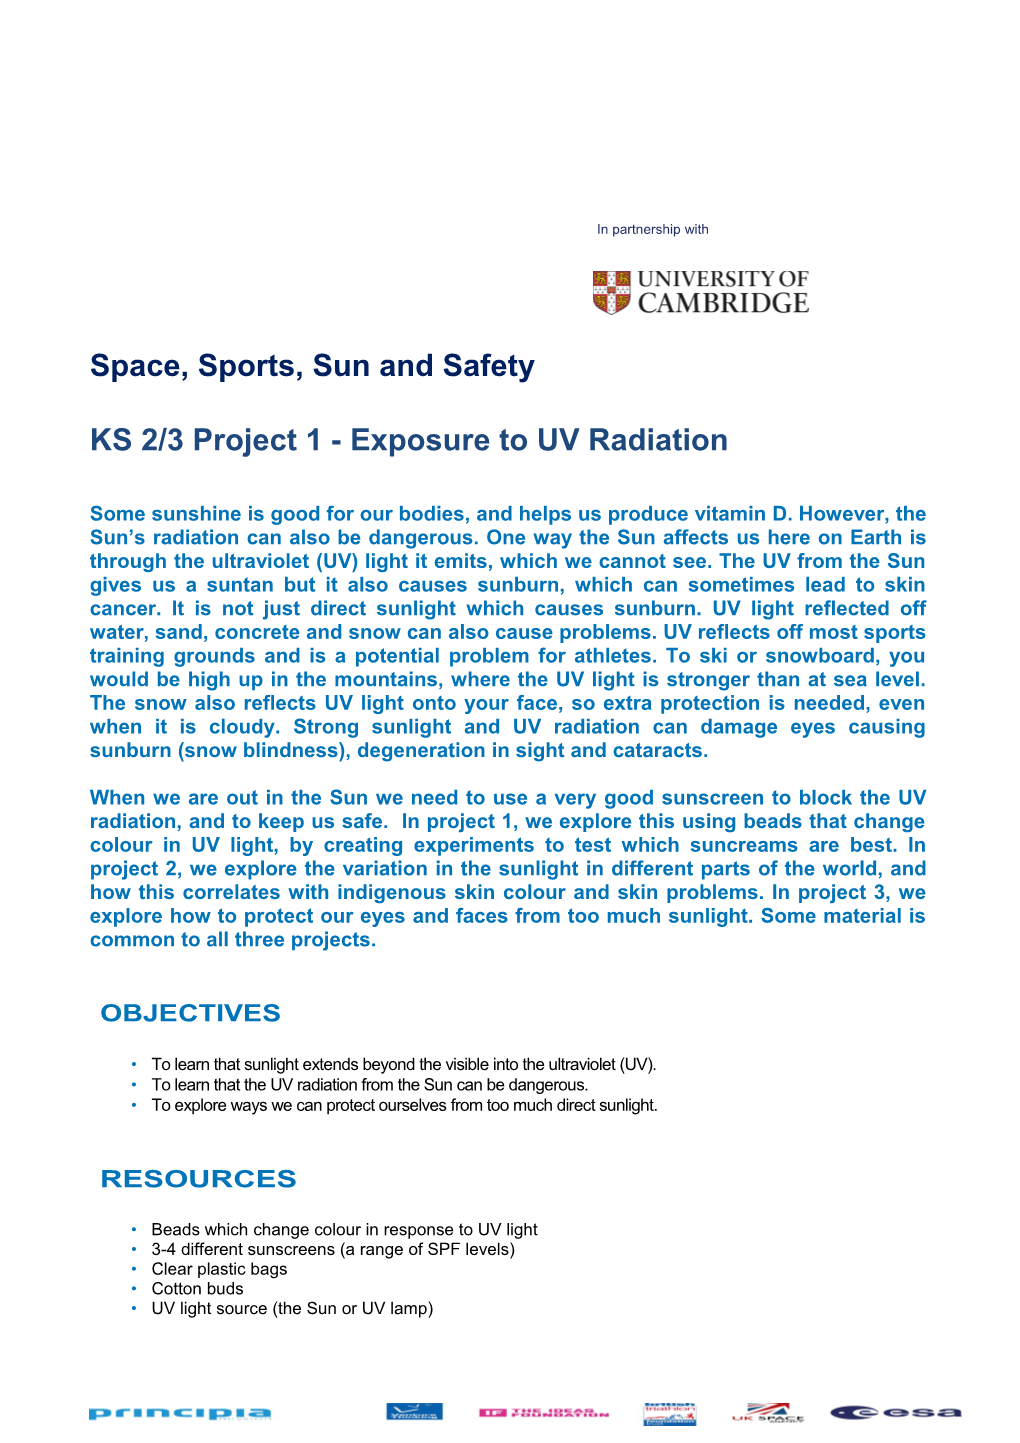 KS 2/3 Project 1 - Exposure to UV Radiation - KS2/3